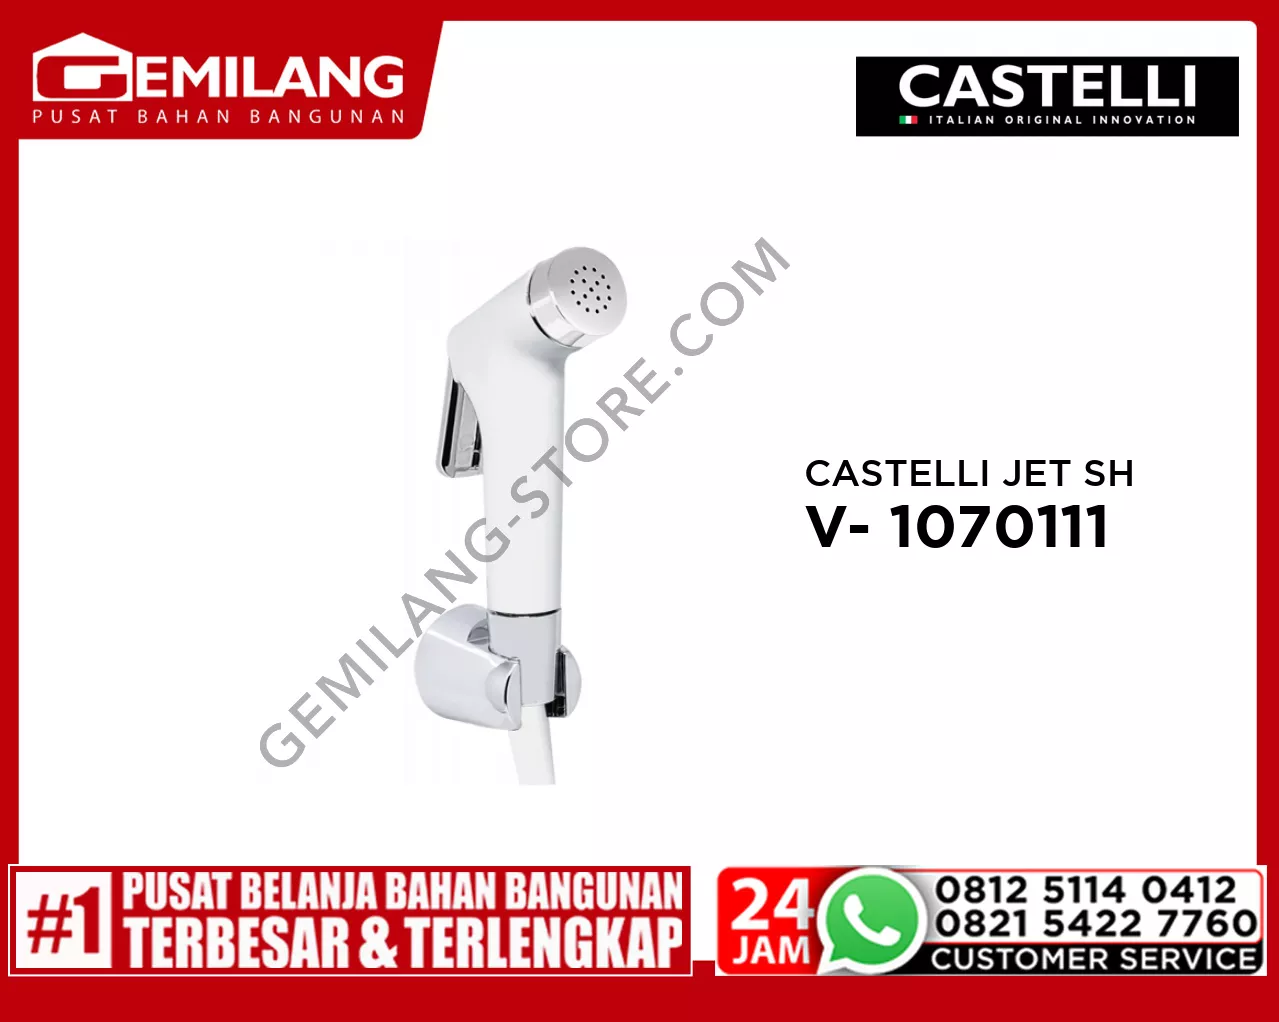 CASTELLI JET SHOWER IVORY IV- 1070111